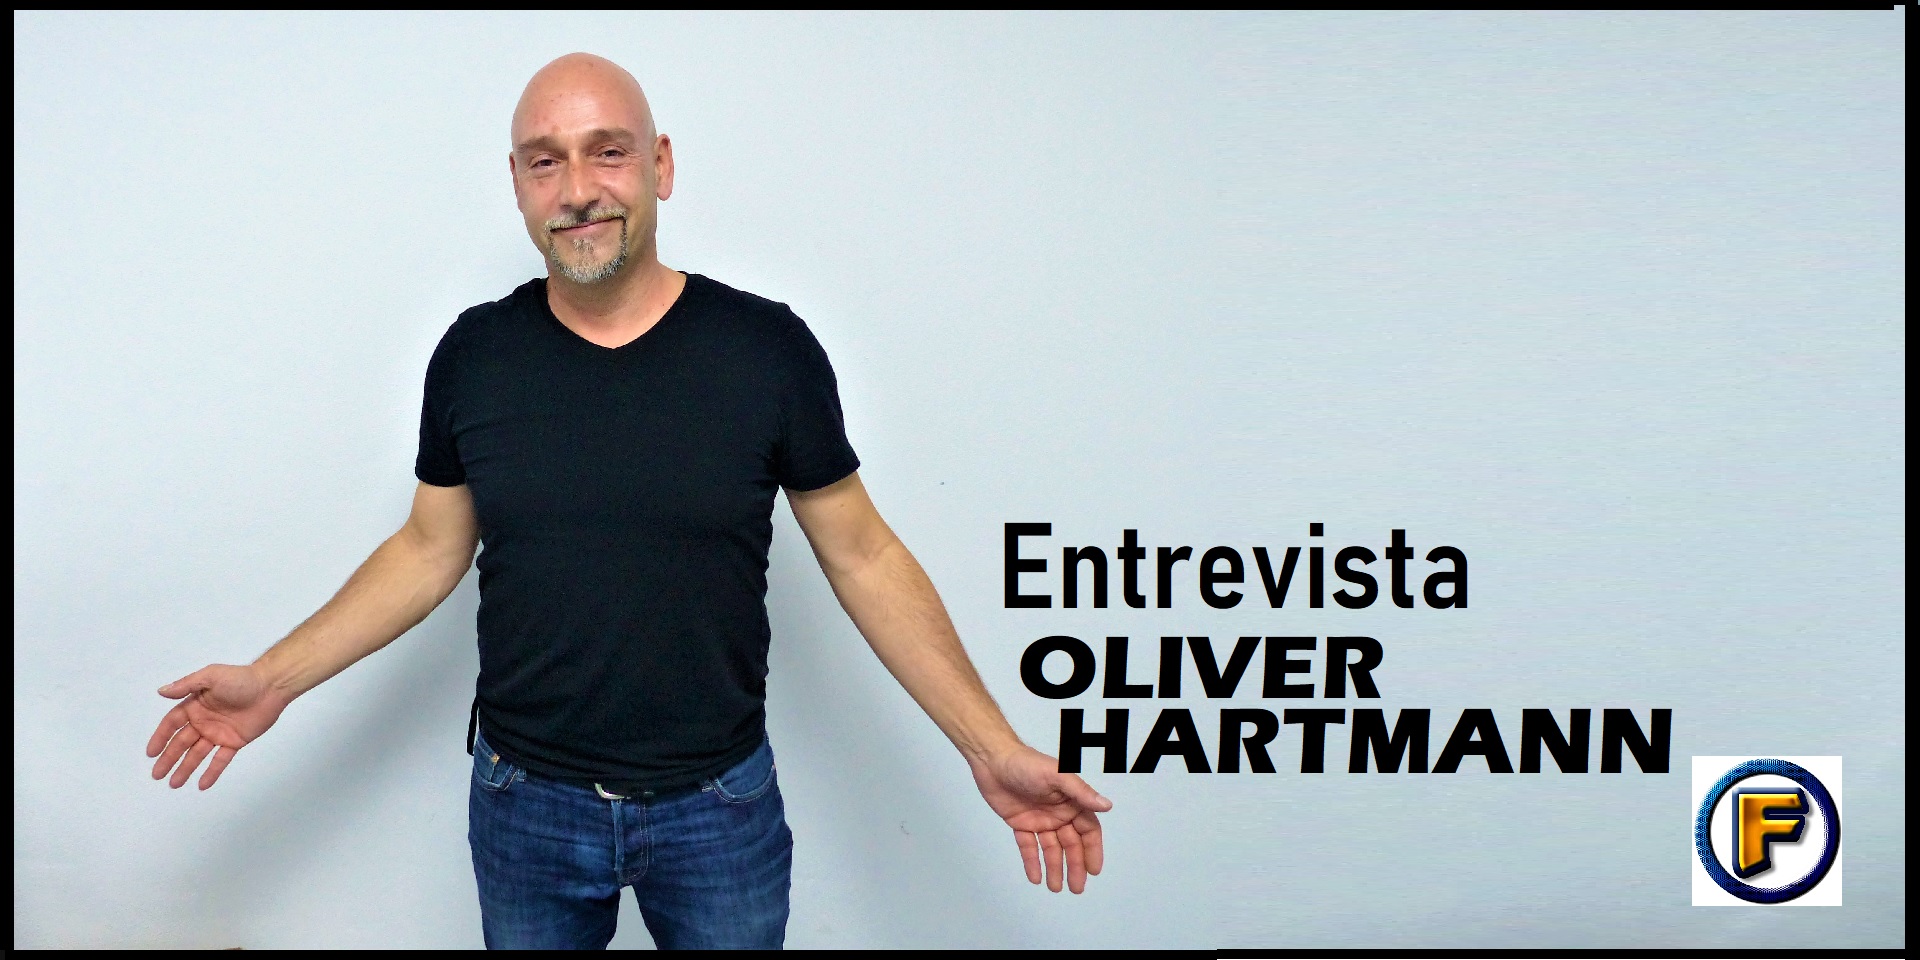 Entrevista Oliver HARTMANN